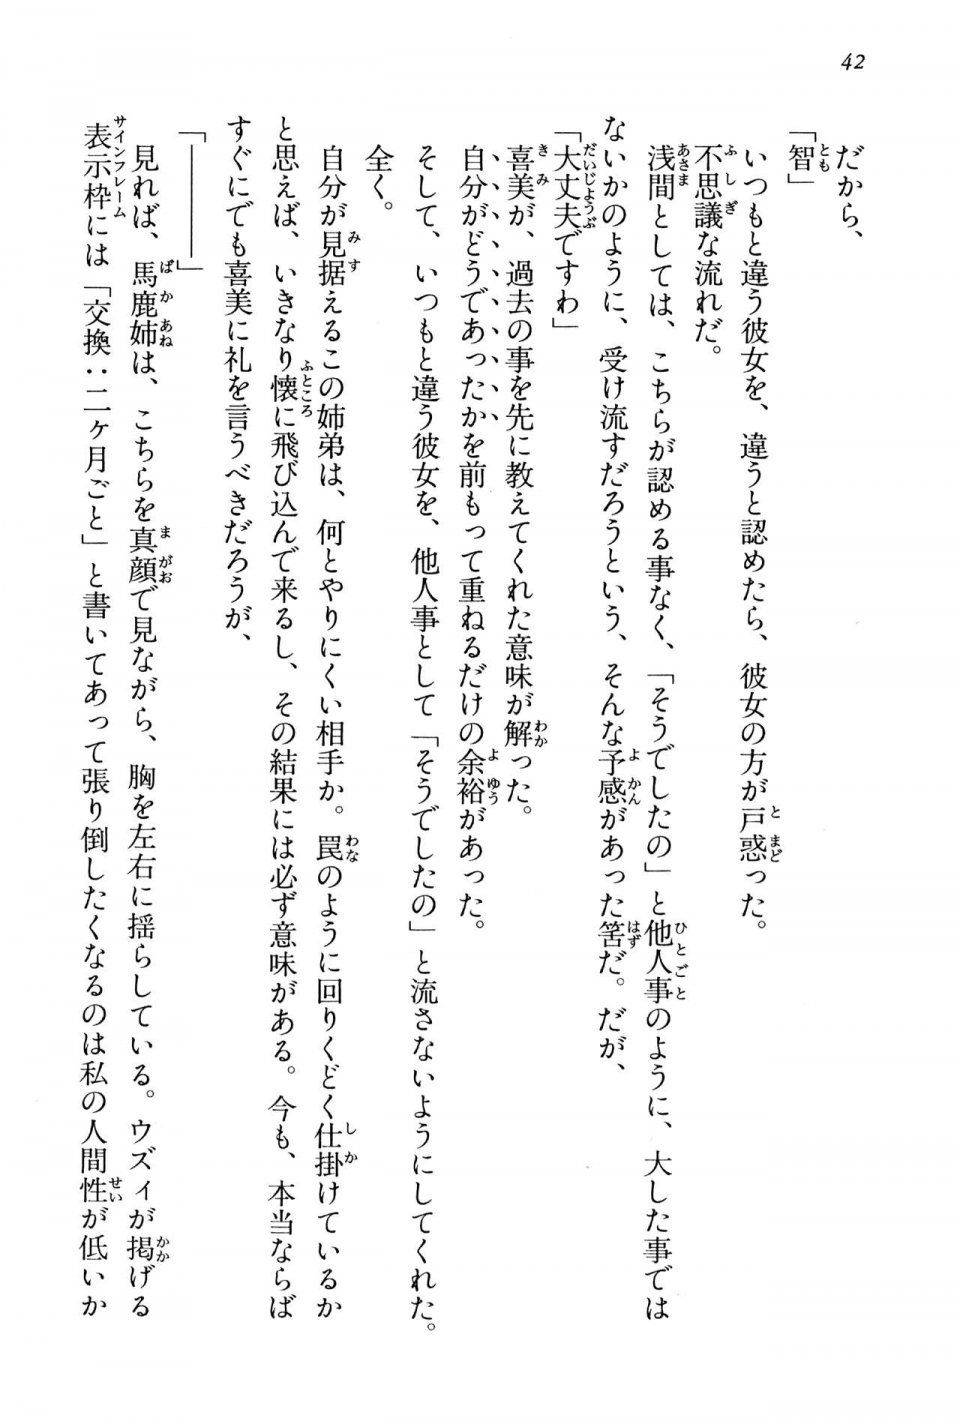 Kyoukai Senjou no Horizon BD Special Mininovel Vol 3(2A) - Photo #46